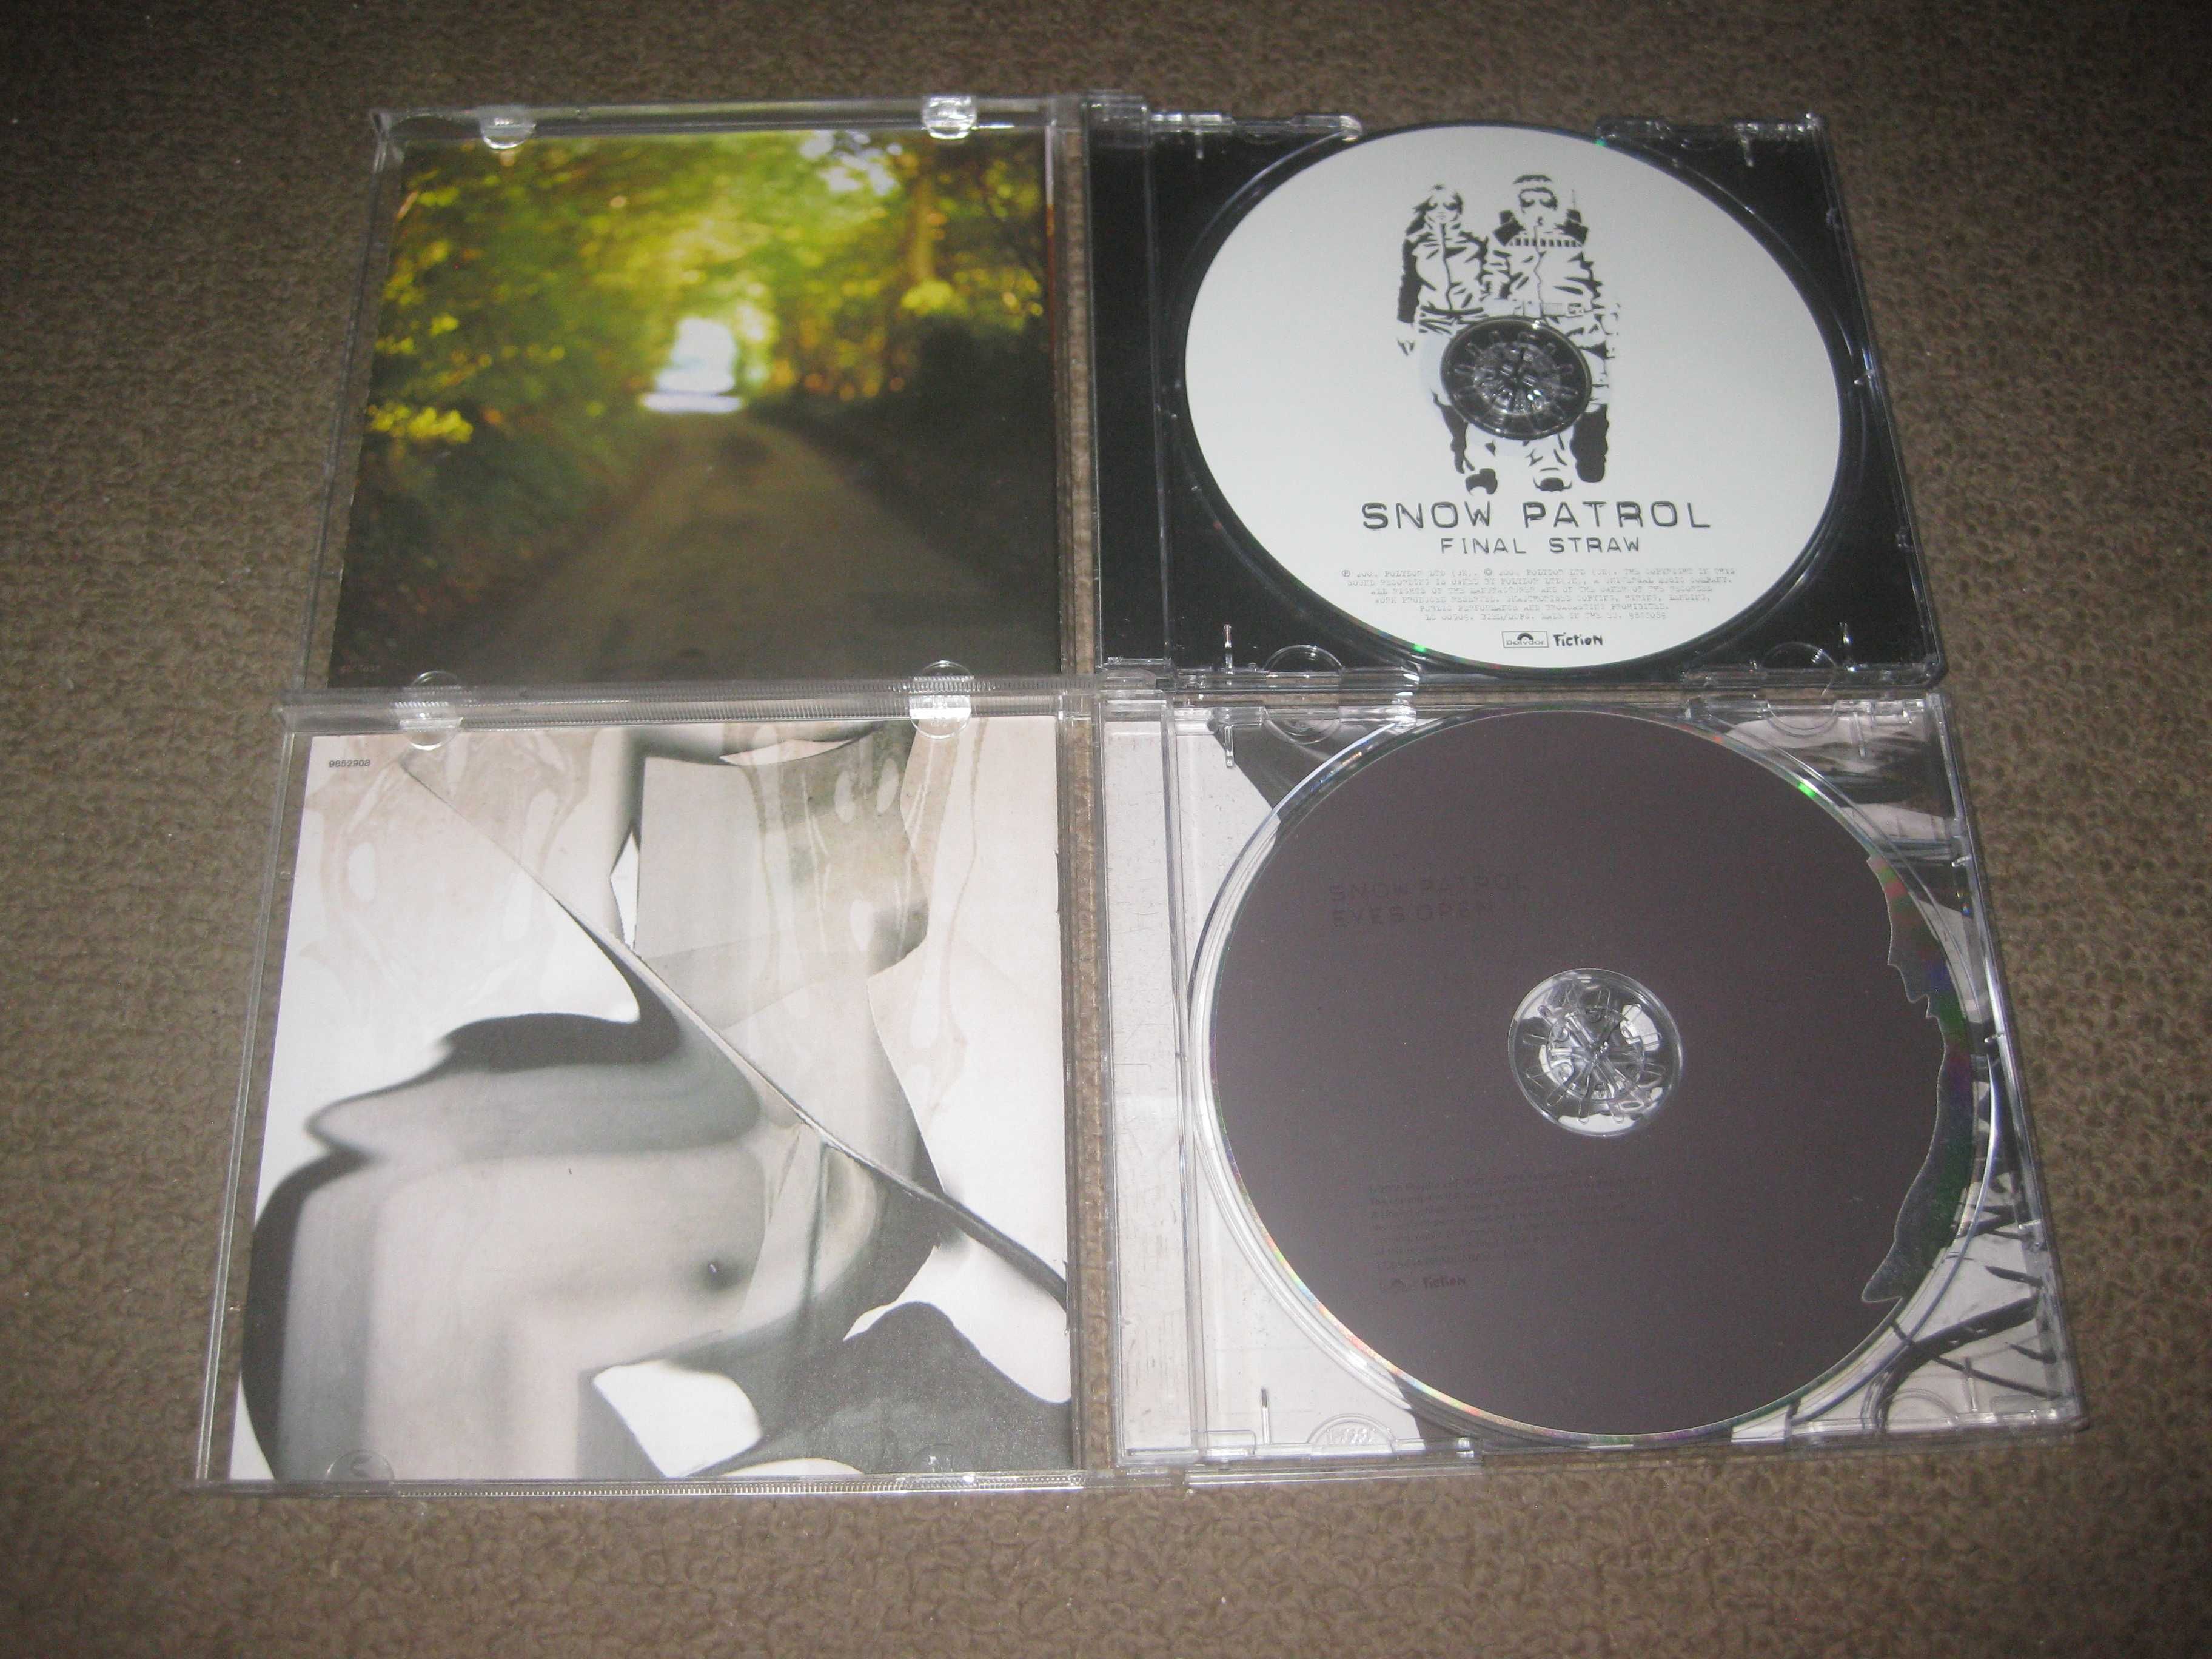 2 CDs dos "Snow Patrol"